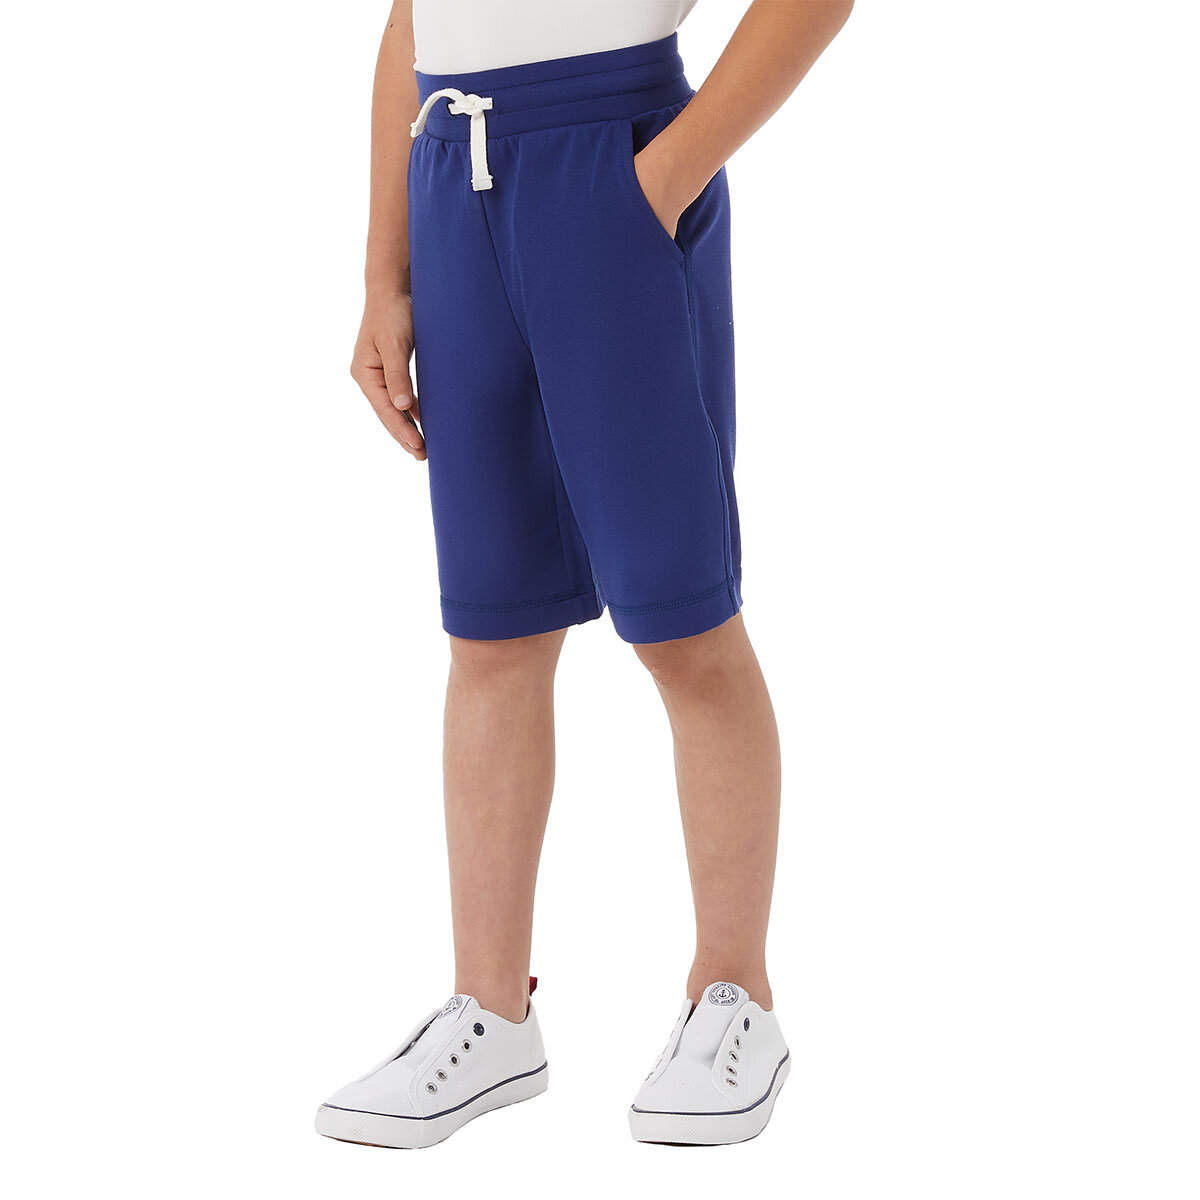 image of side of blue shorts